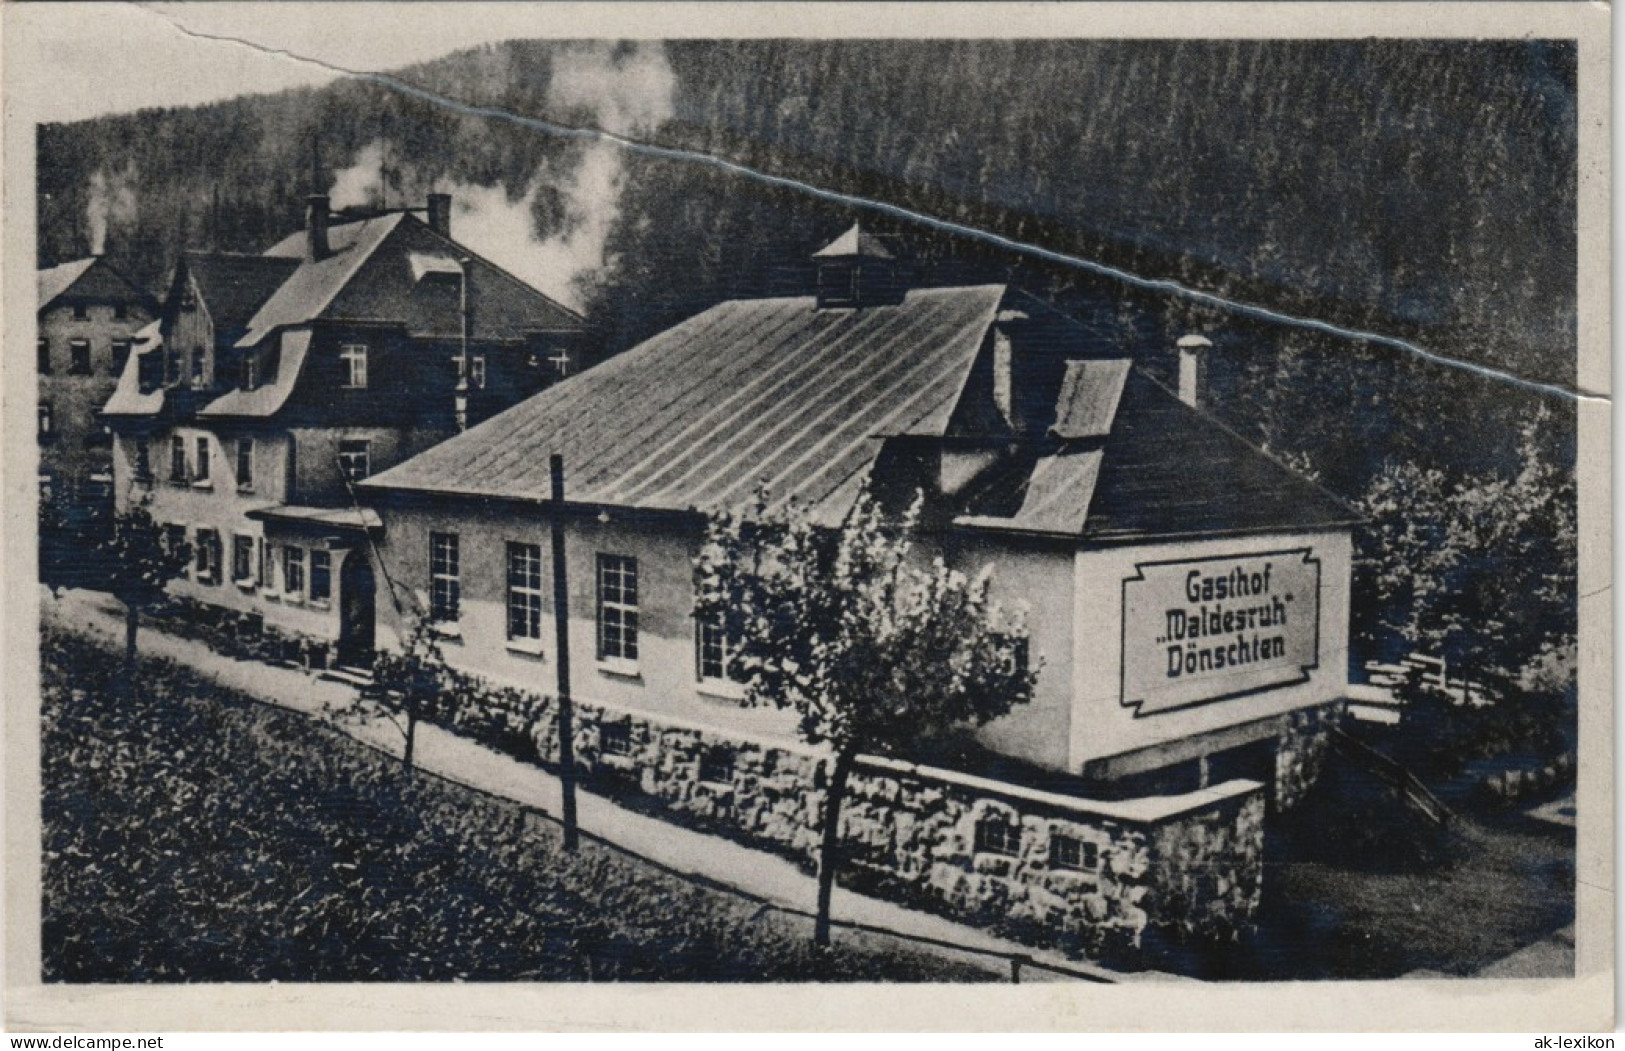 Ansichtskarte Dönschten-Dippoldiswalde Gasthof Waldesruh 1943  Gel. Feldpost WK2 - Schmiedeberg (Erzgeb.)